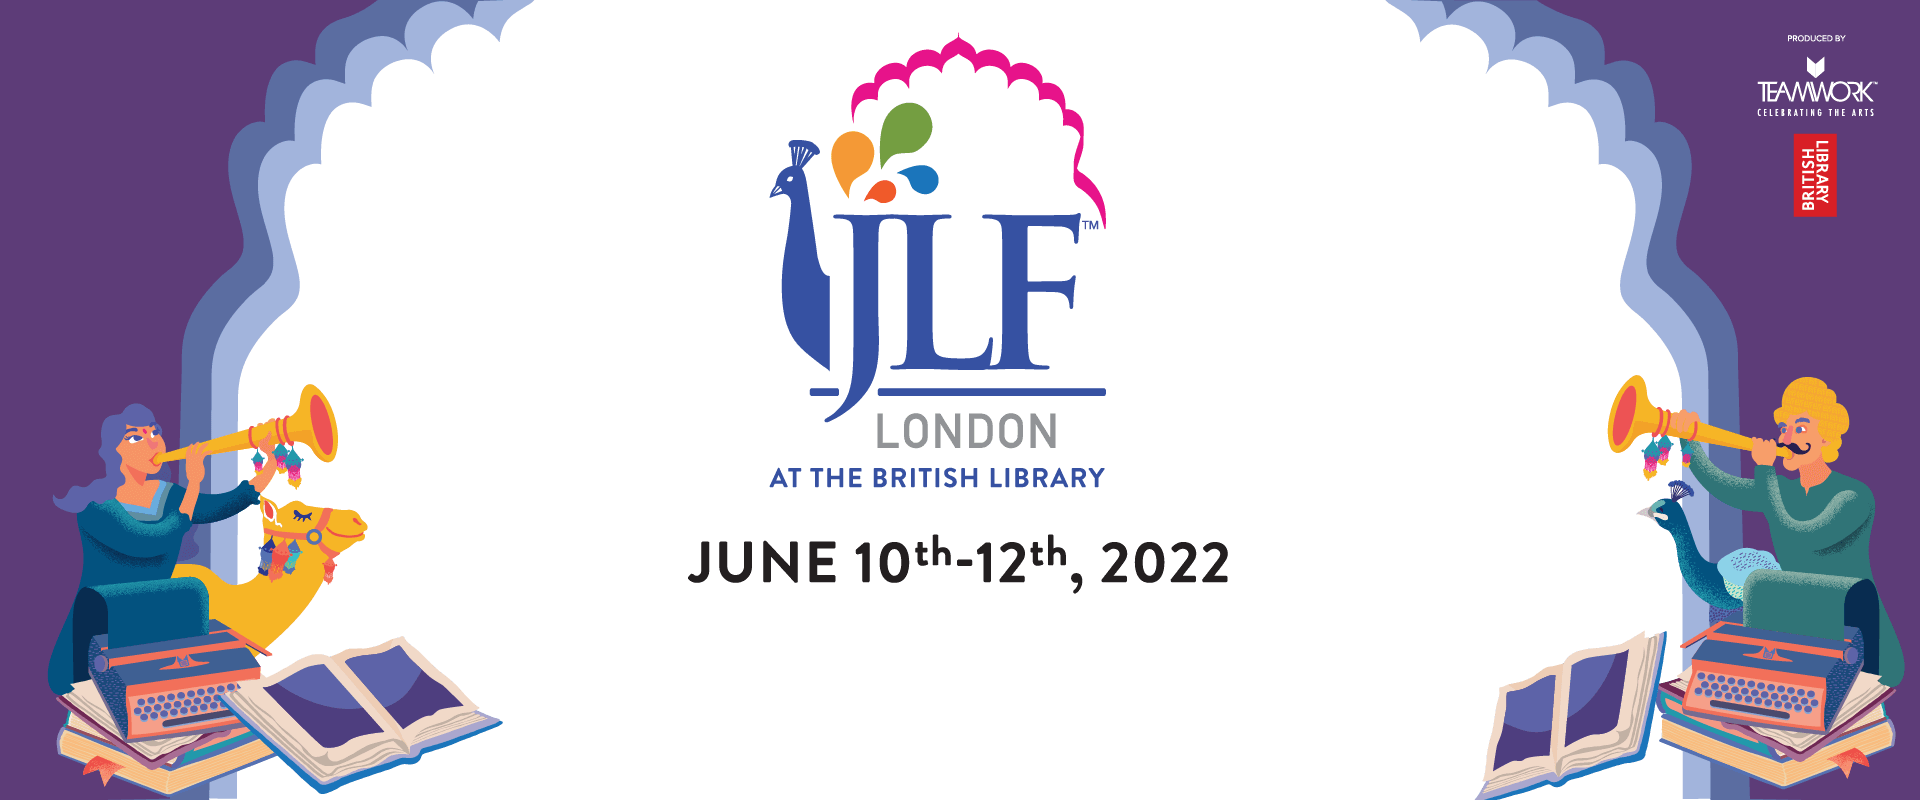 JLF LONDON at the British Library 2022, London, United Kingdom